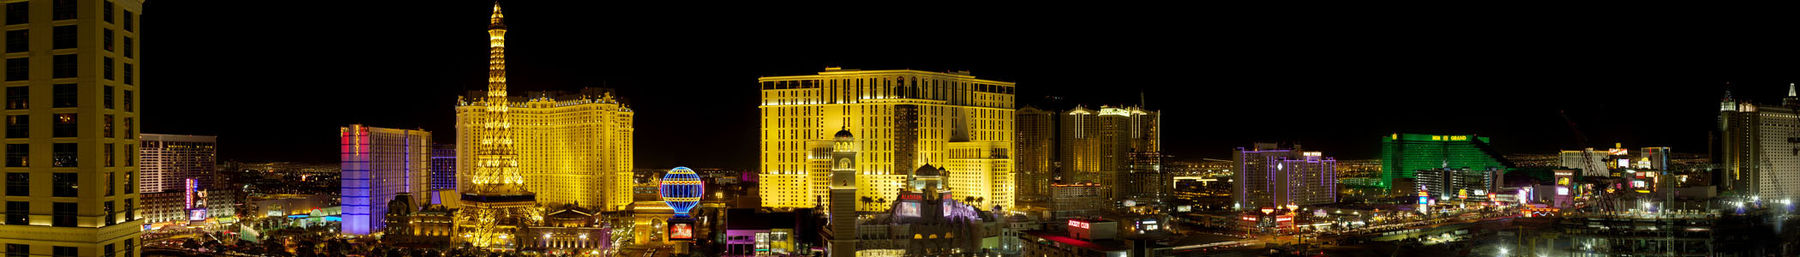 Las Vegas banner.jpg